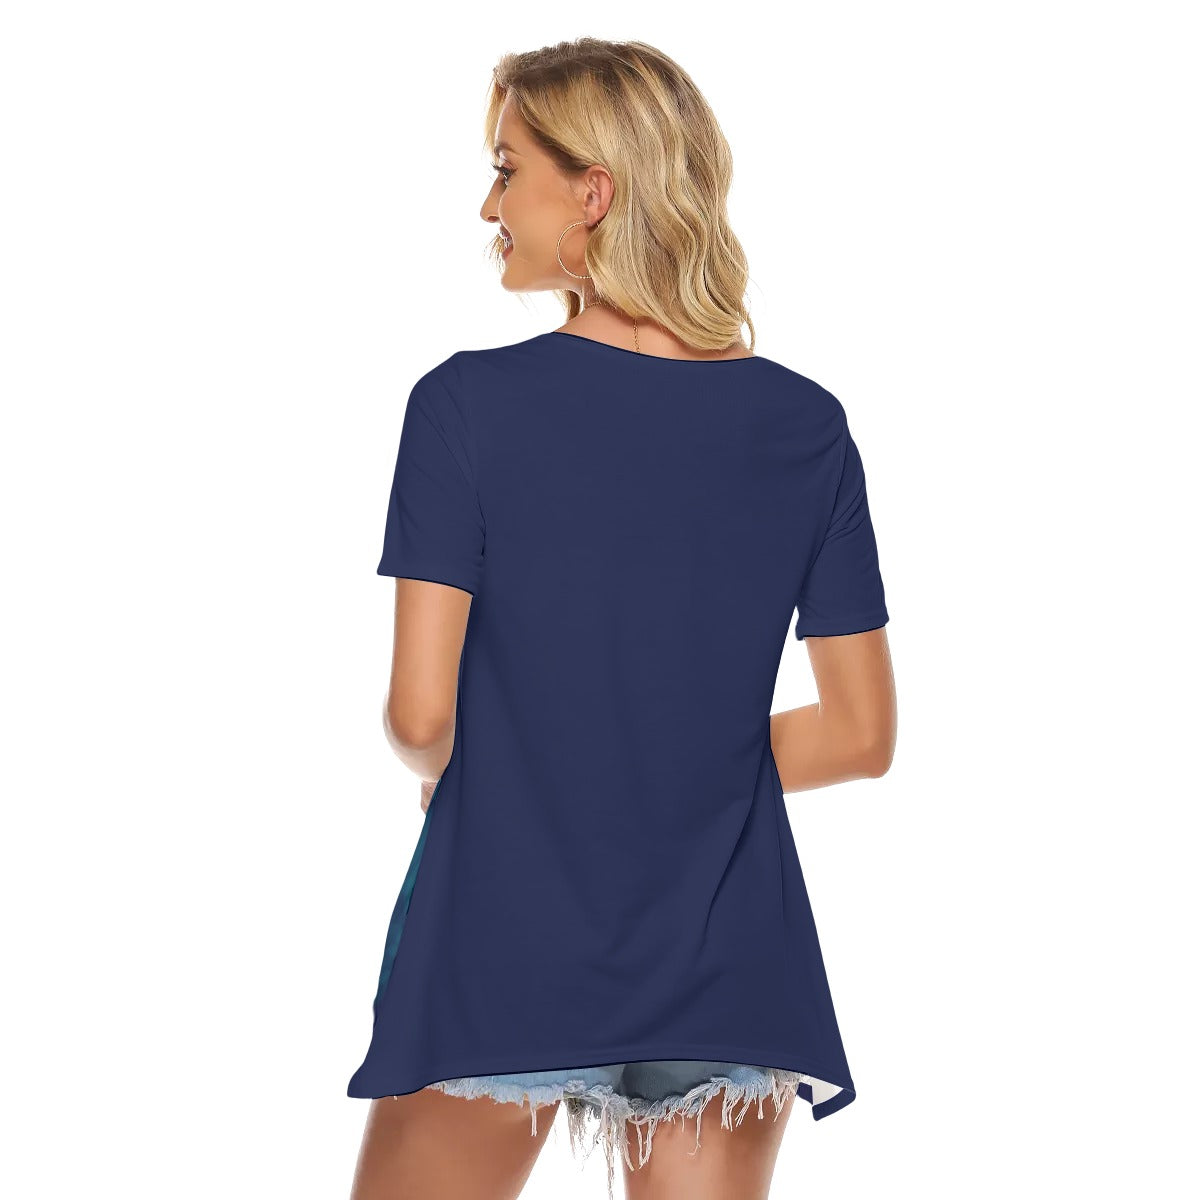 Moonlight All-Over Print Women's O-neck Short Sleeve T-shirt